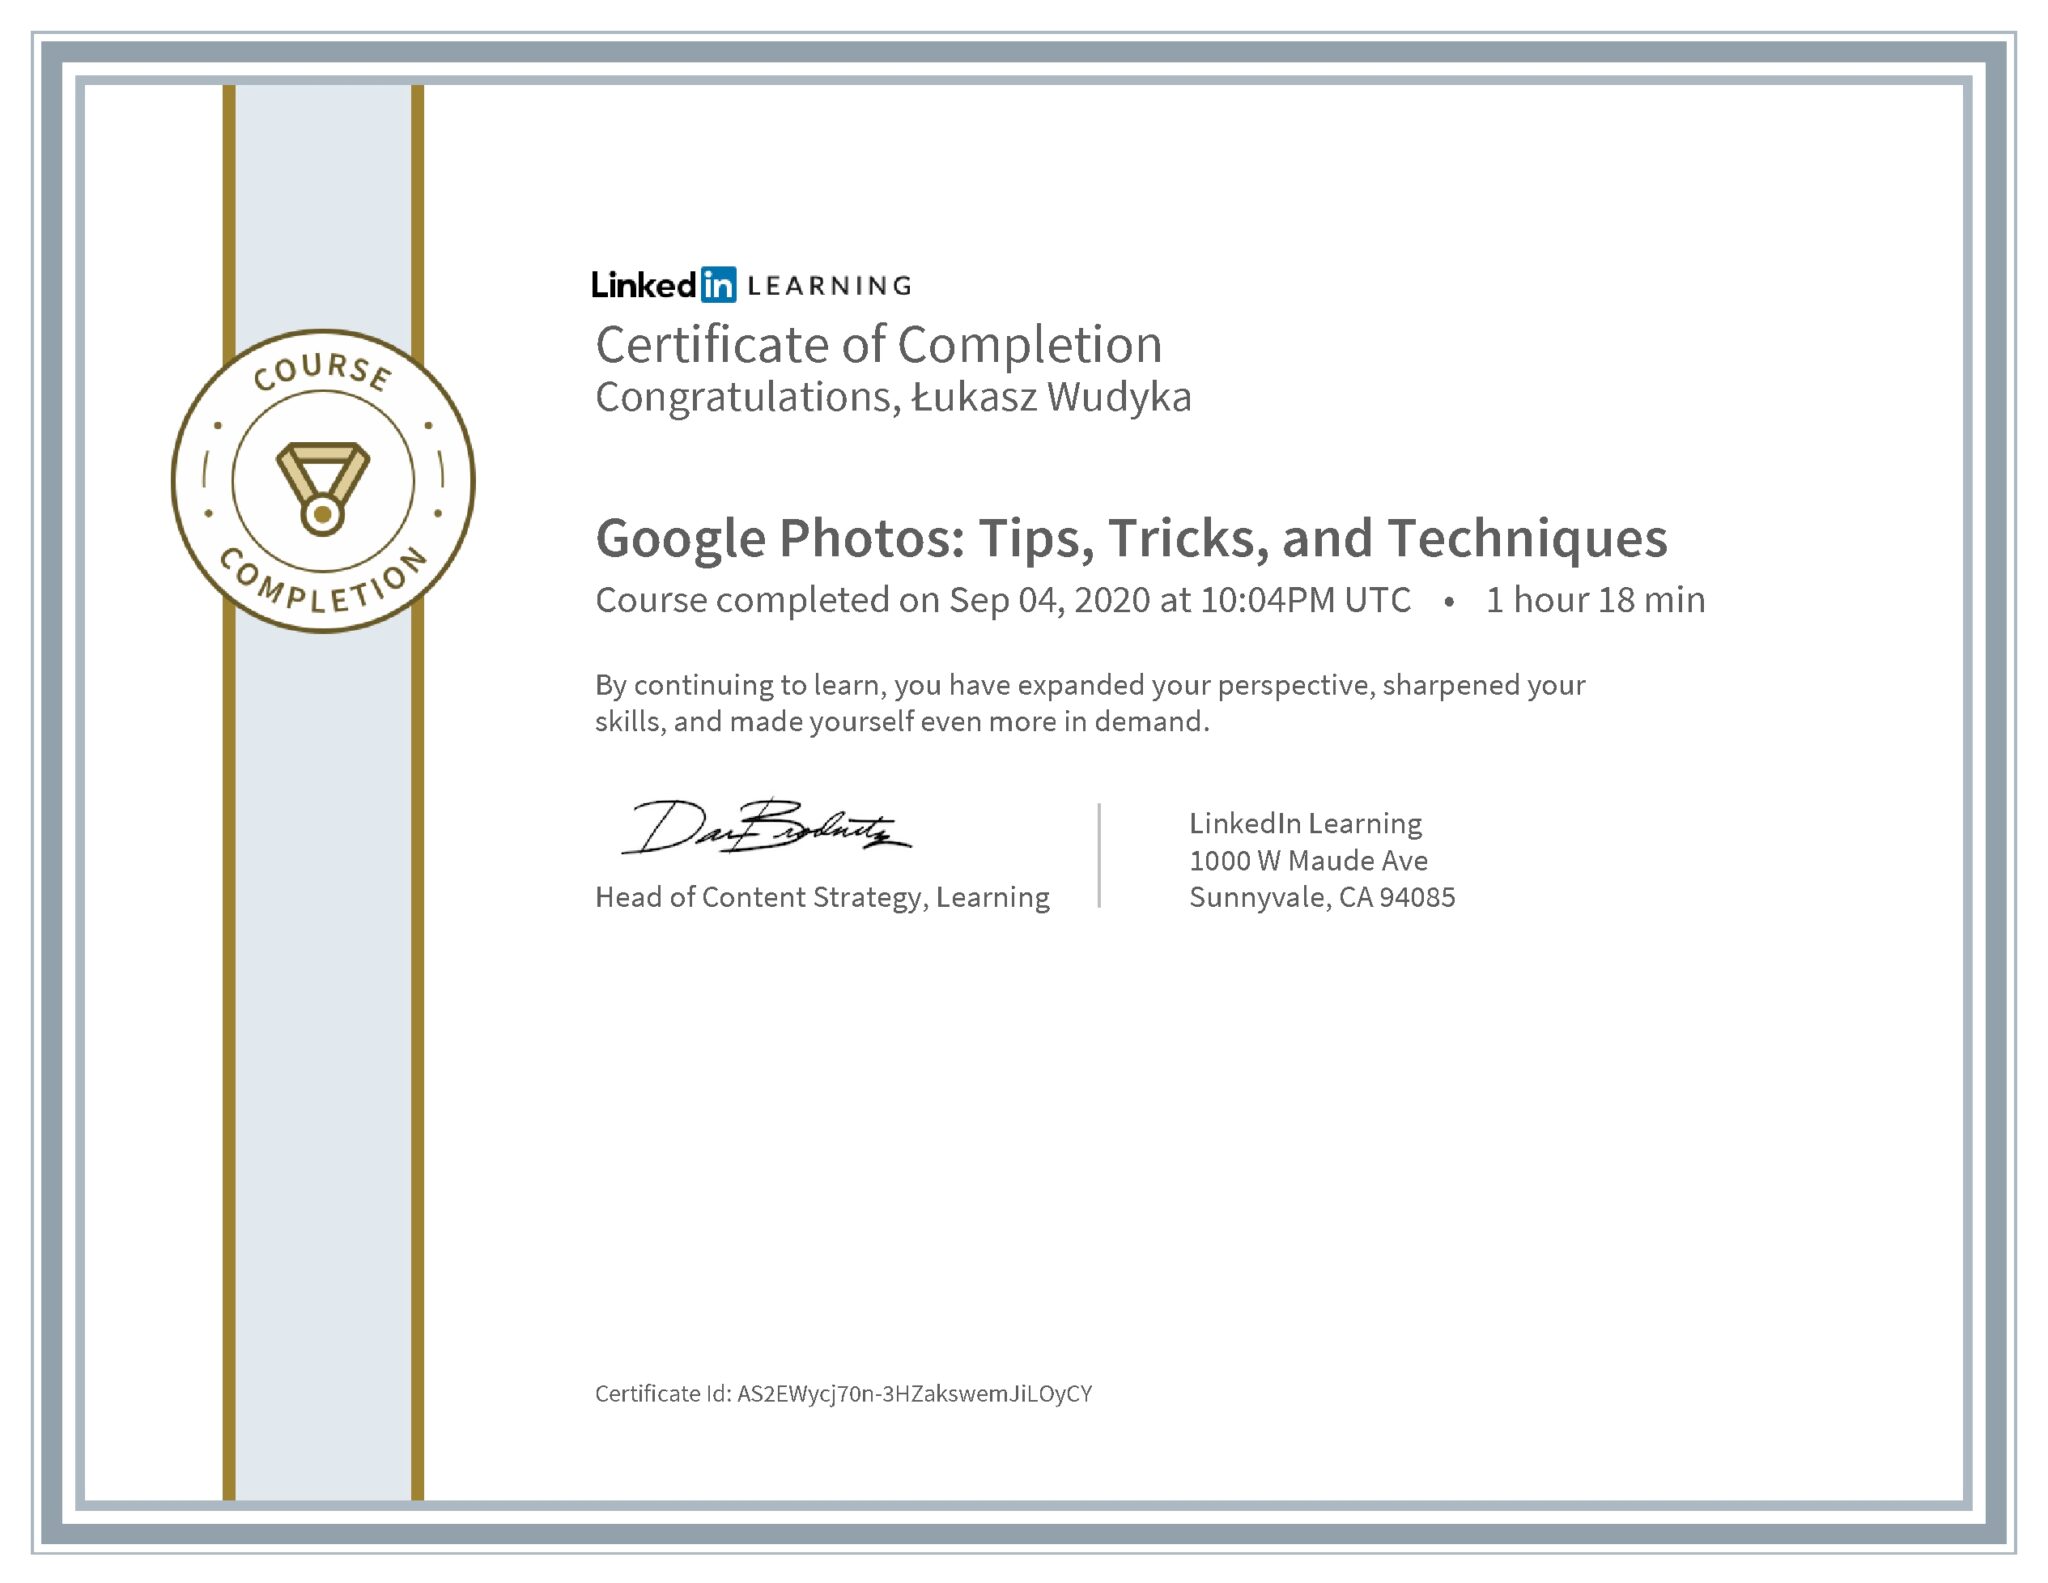 Łukasz Wudyka certyfikat LinkedIn Google Photos; Tips, Tricks, and Techniques